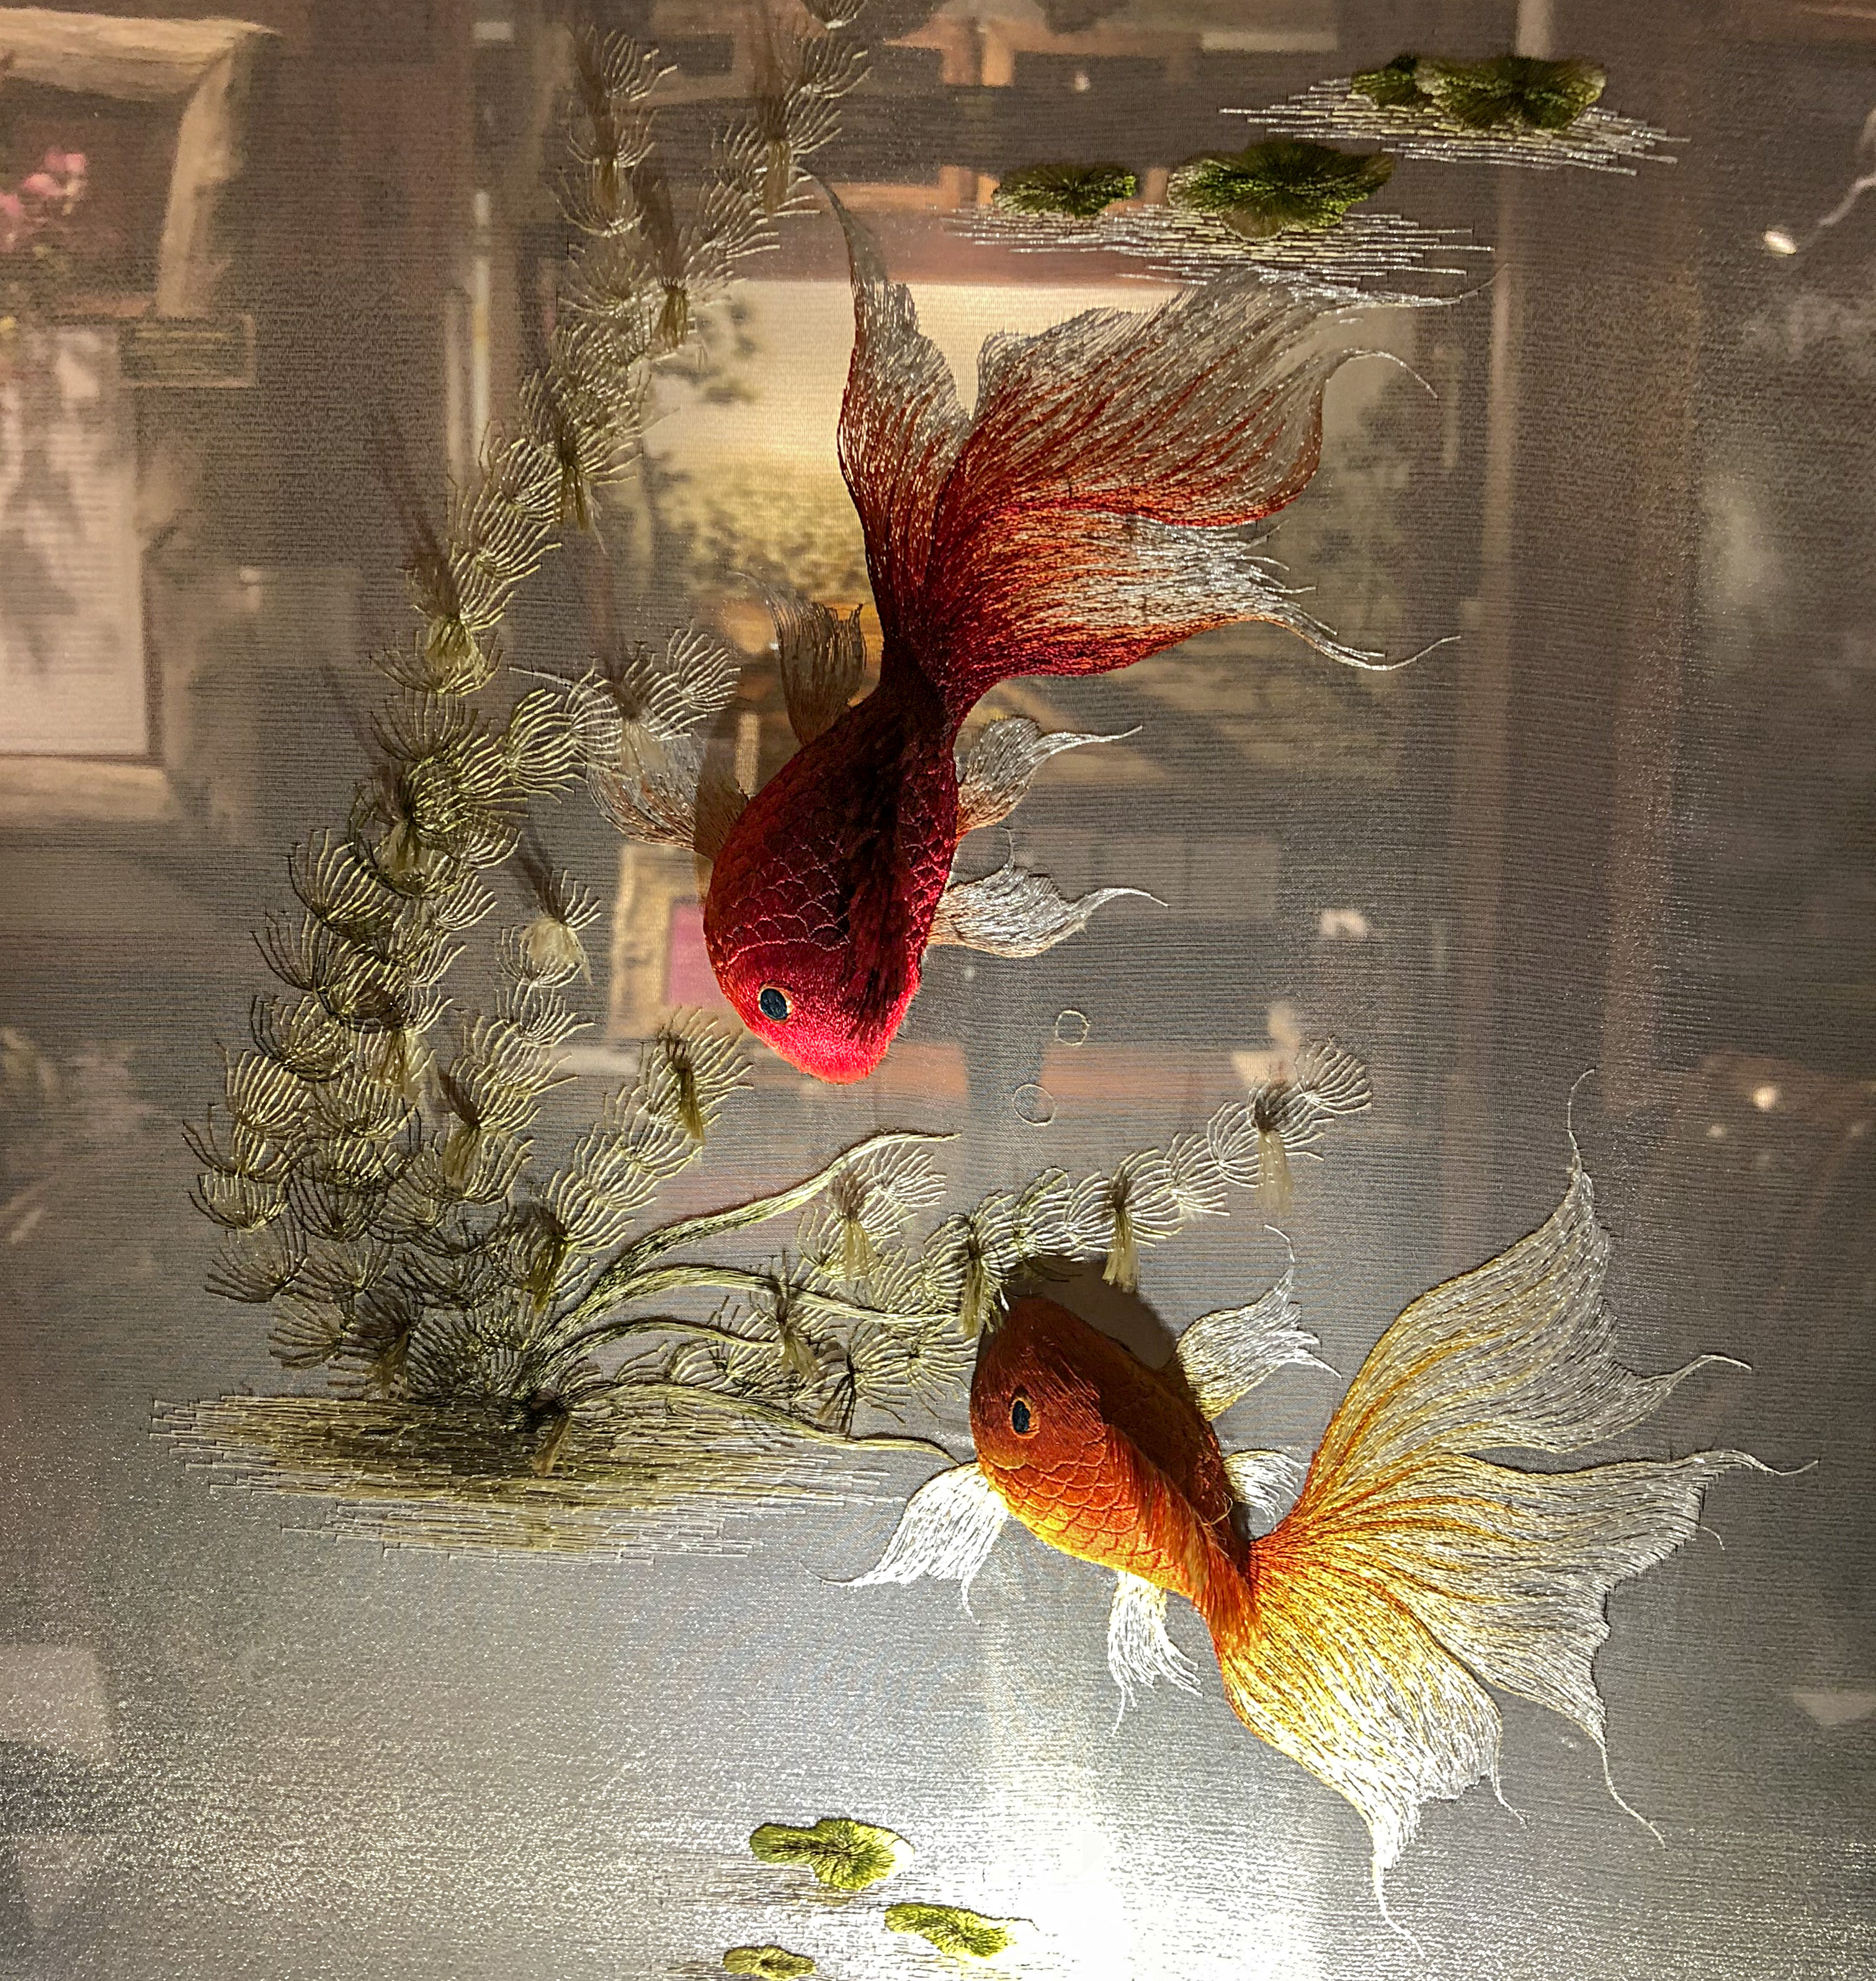 Hue, embroidery goldfish